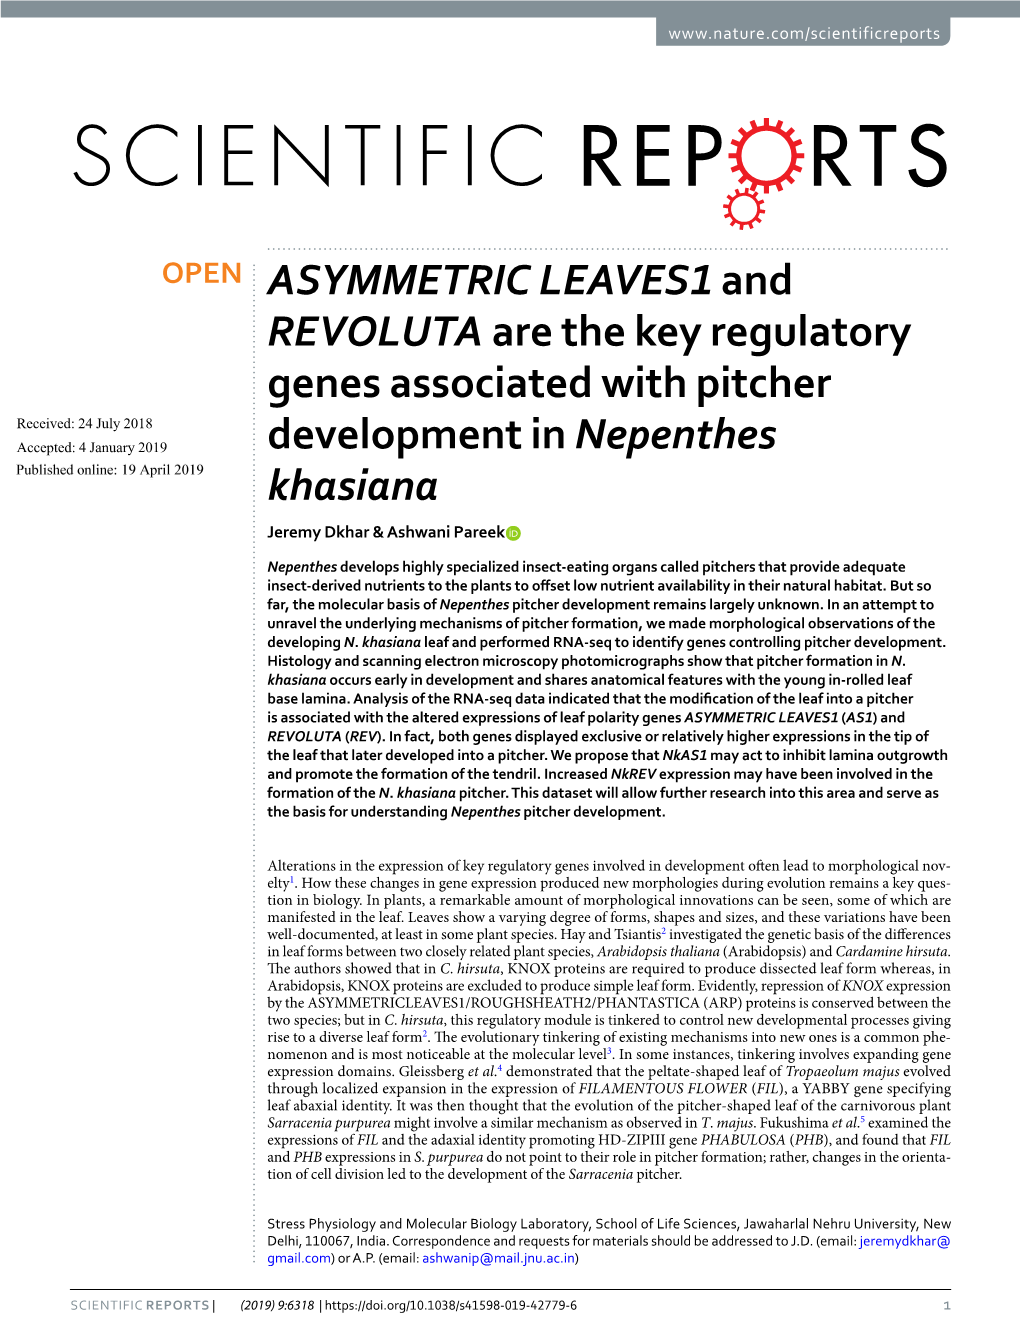 ASYMMETRIC LEAVES1 and REVOLUTA Are the Key Regulatory